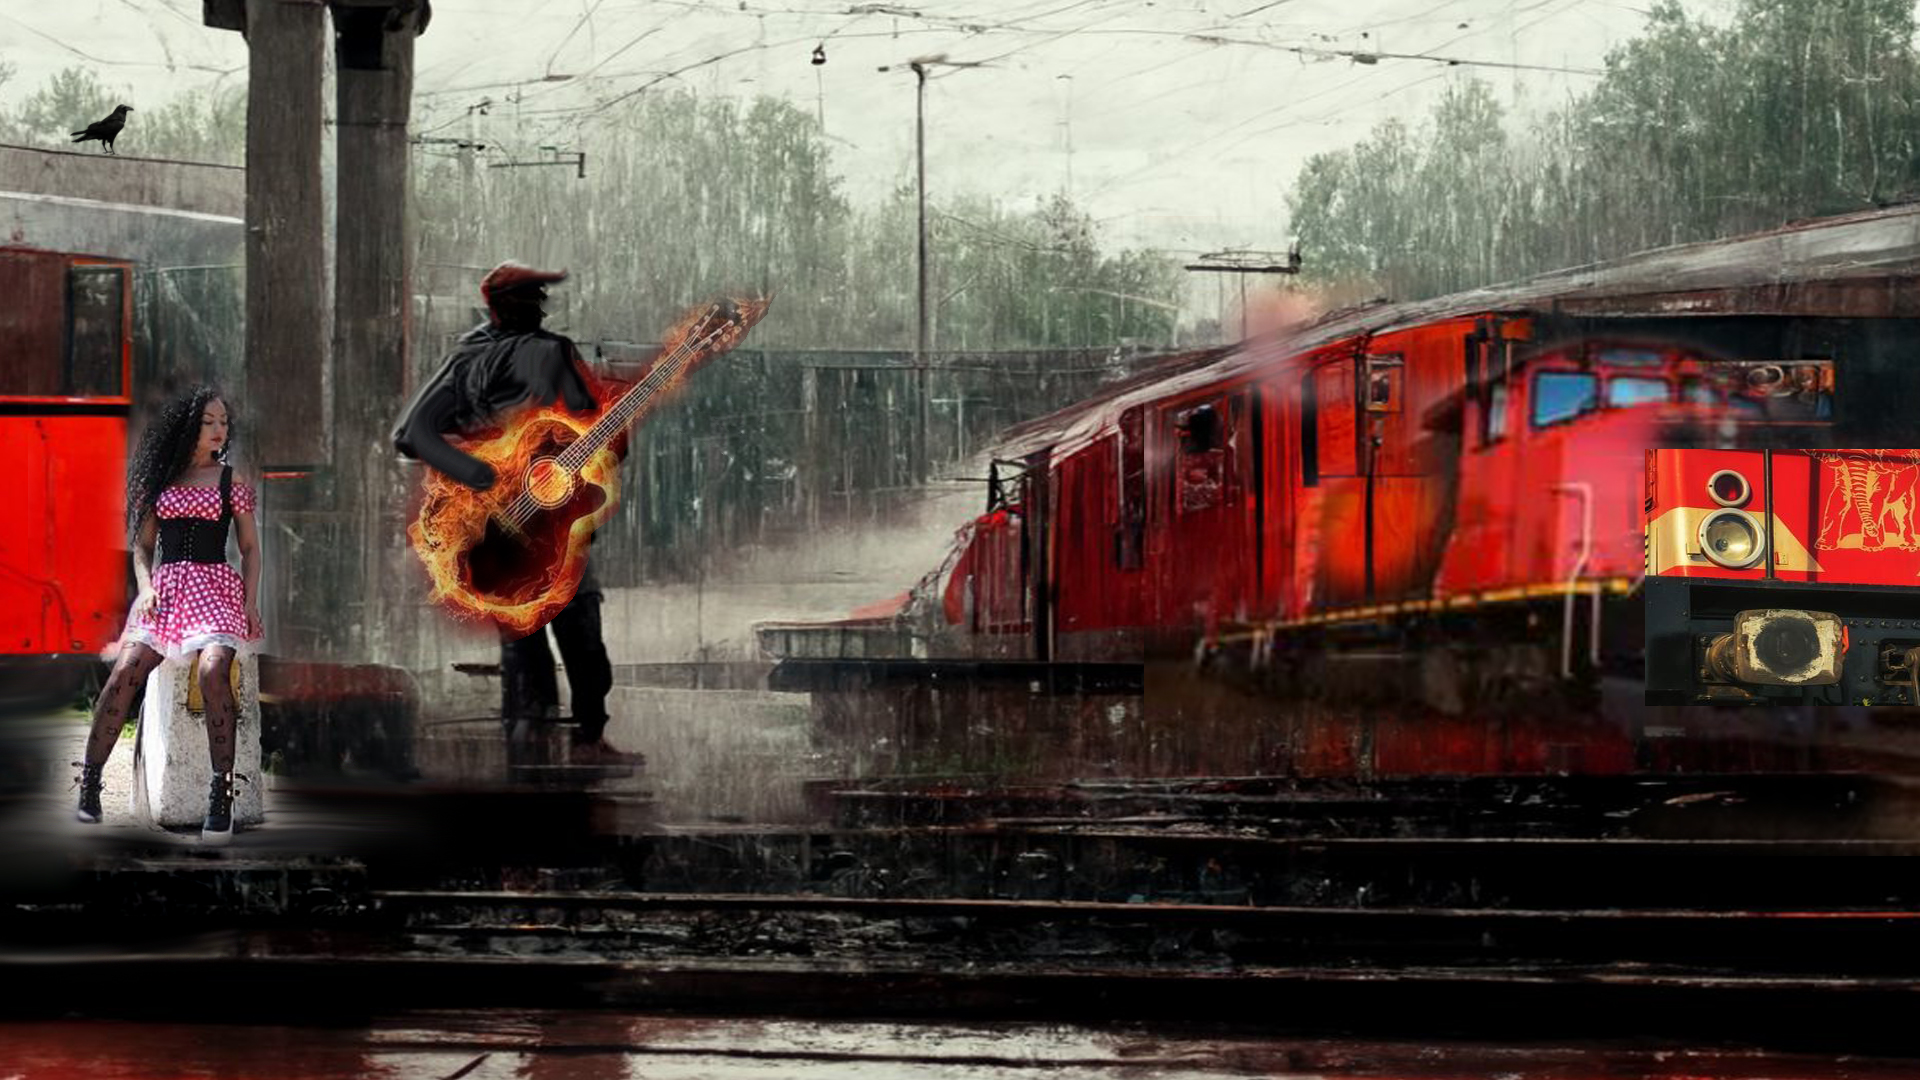 the rain and the train